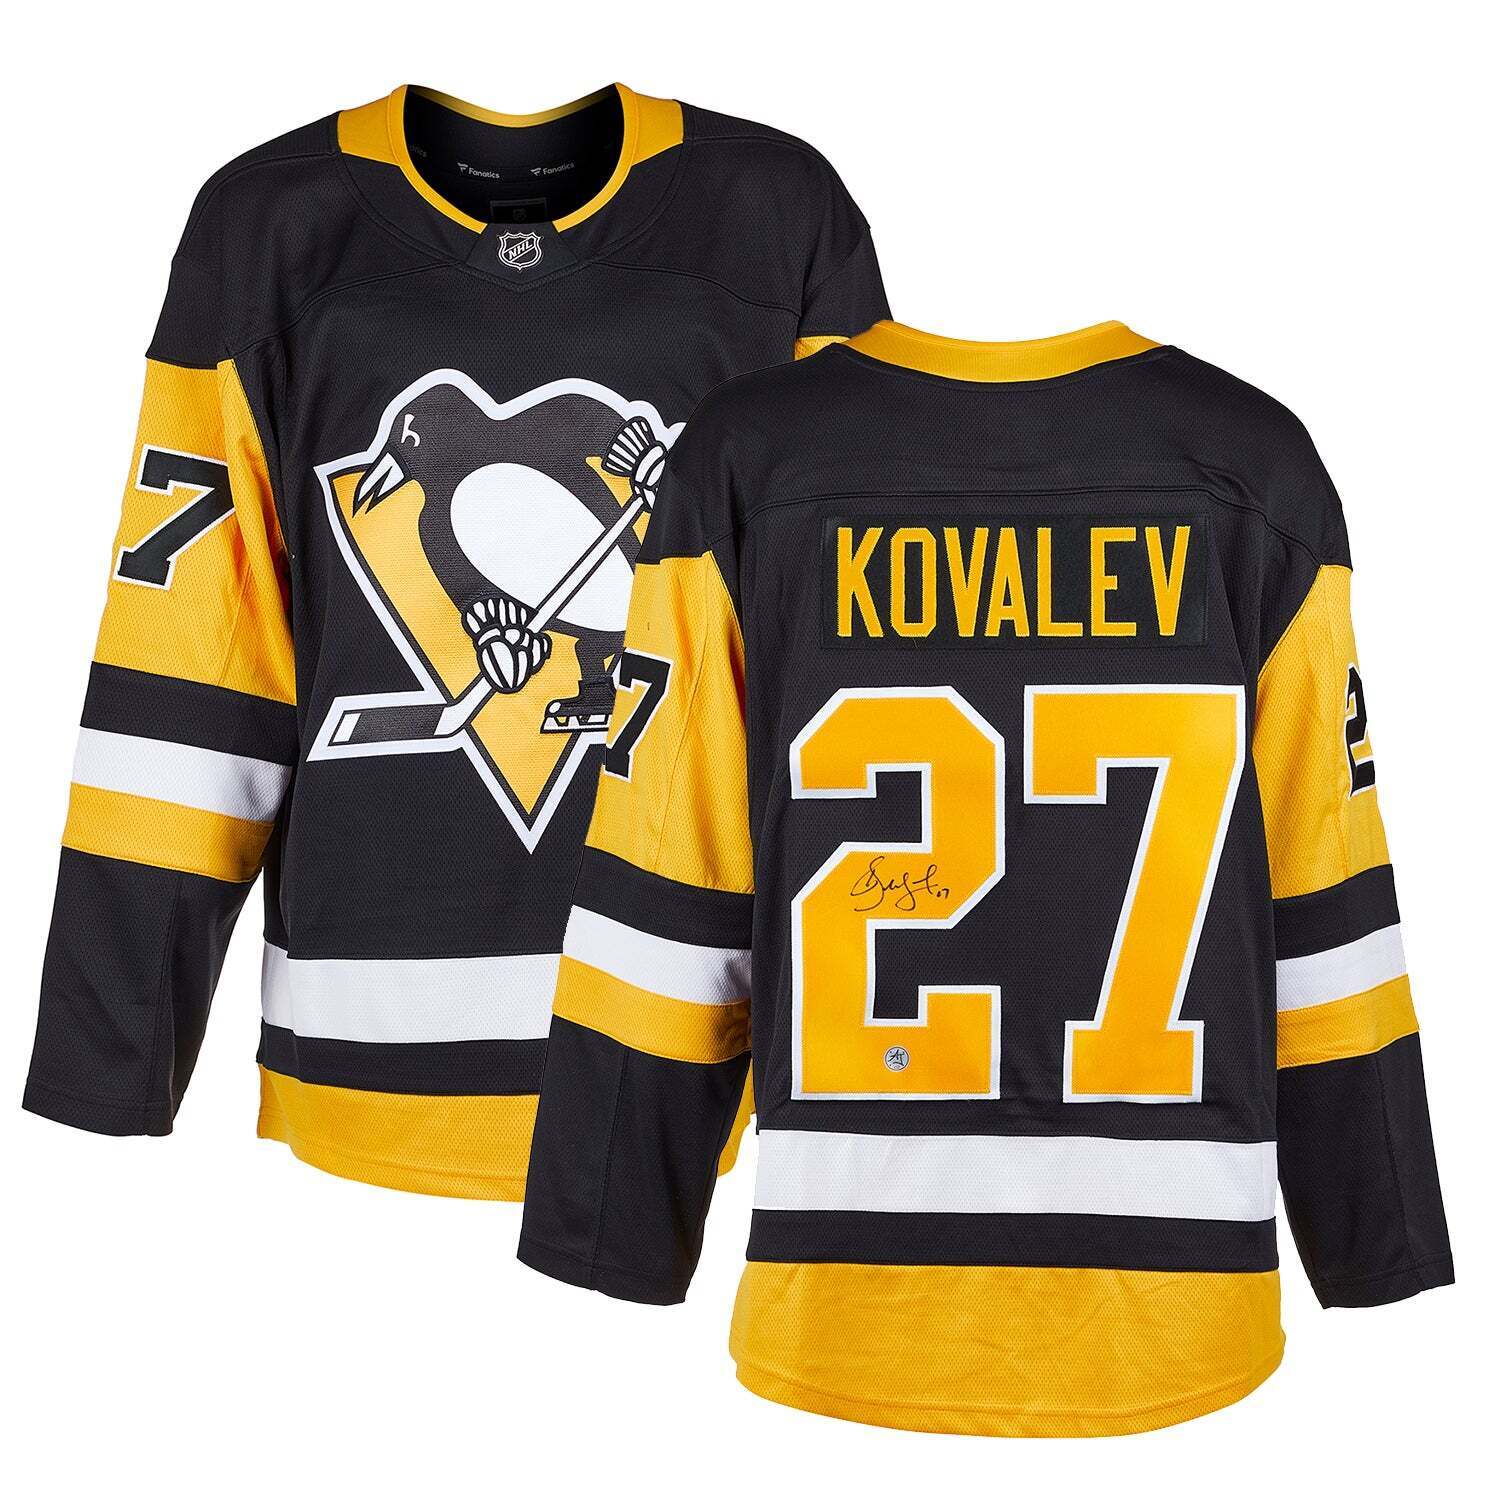 Alexei Kovalev Autographed Signed Pittsburgh Penguins Jersey (JSA